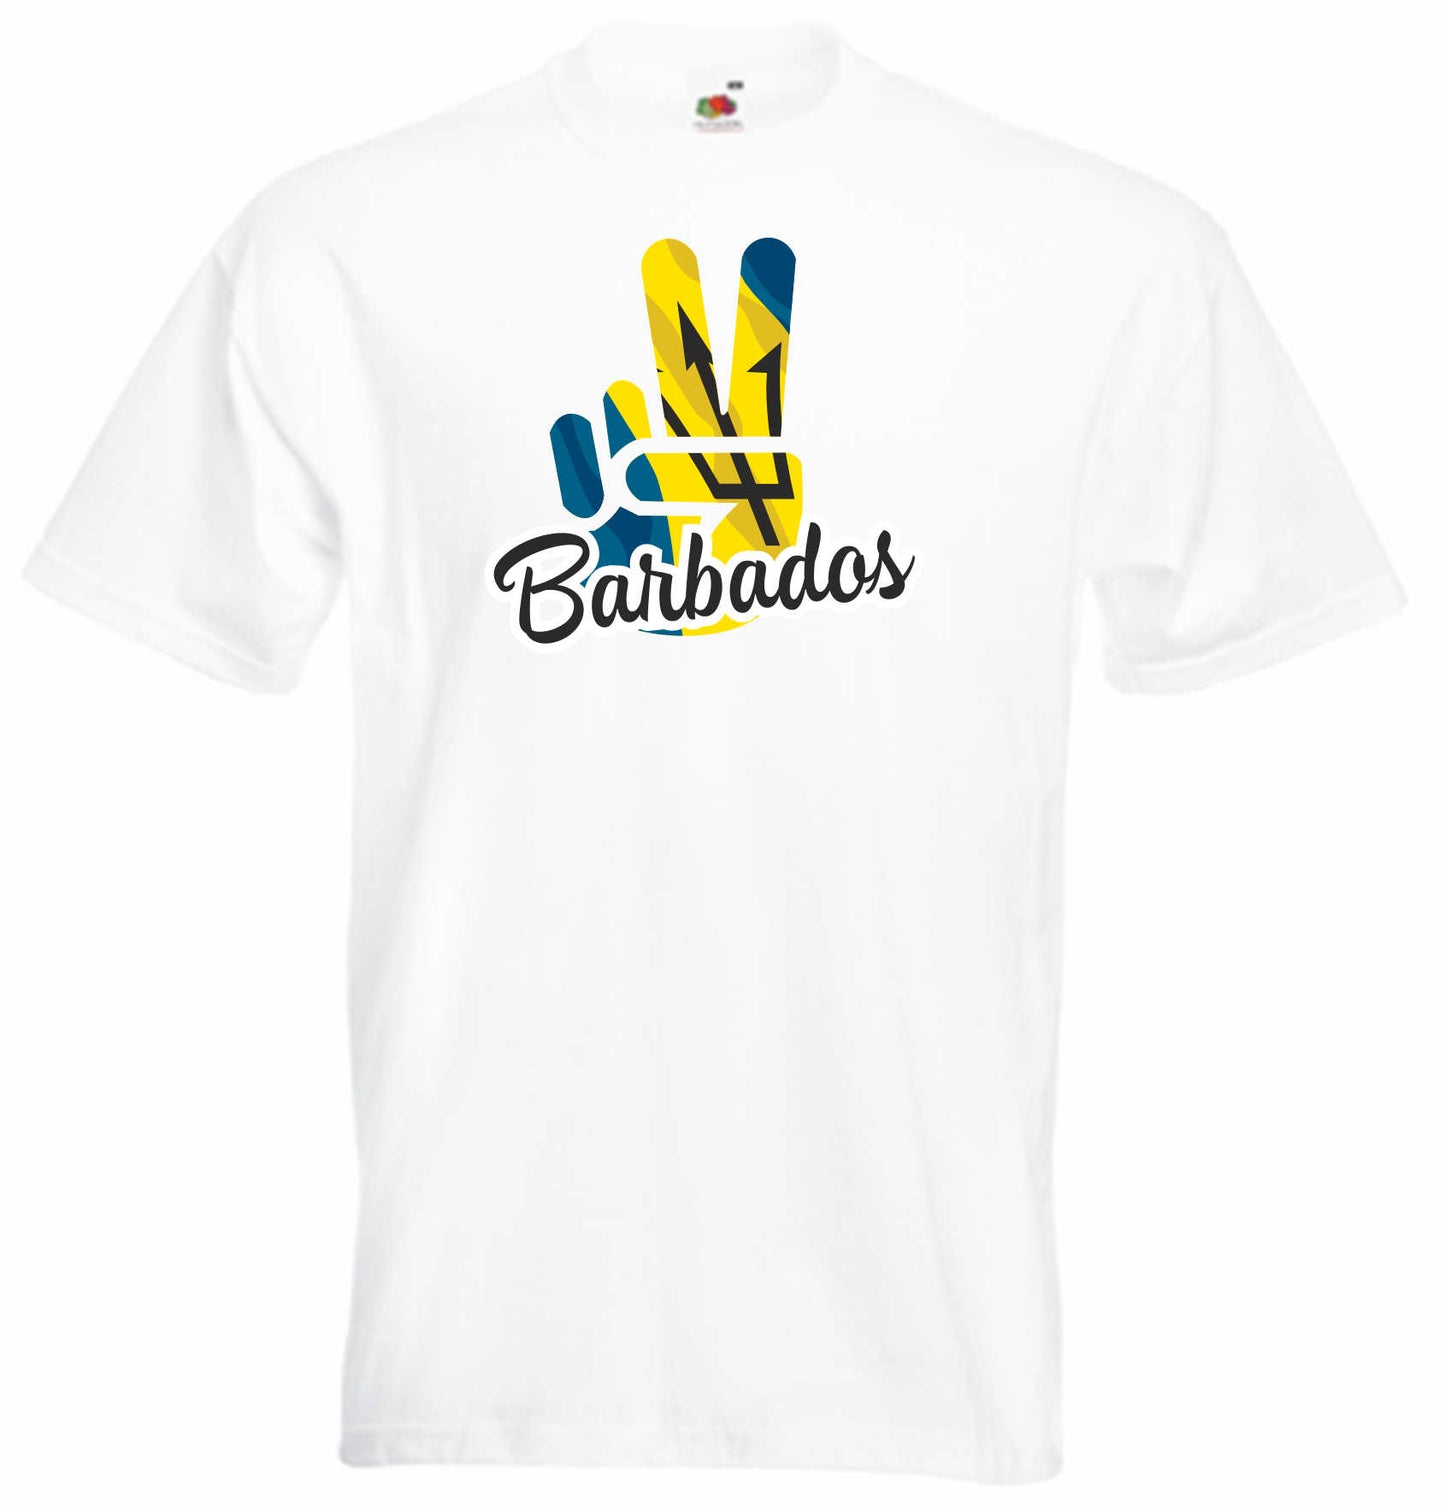 T-Shirt Herren - Victory - Flagge / Fahne - Barbados - Sieg